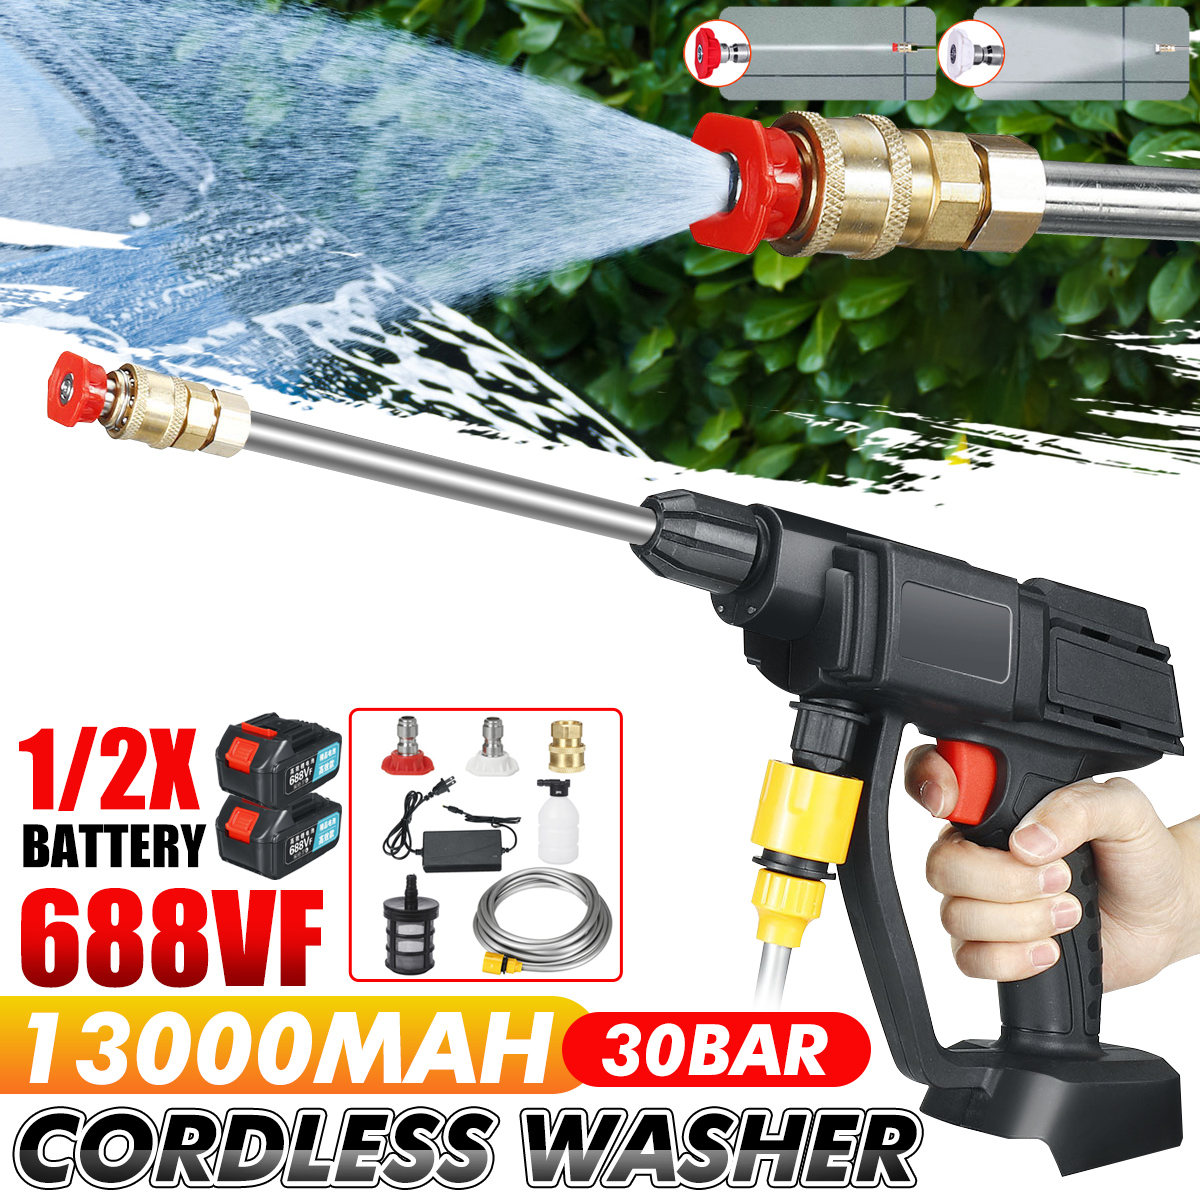 688VF-Wireless-Electric-Car-Washer-Tools-High-Pressure-Washer-Foam-Guns-Water-Sprayer-Auto-Cleaner-W-1855792-2